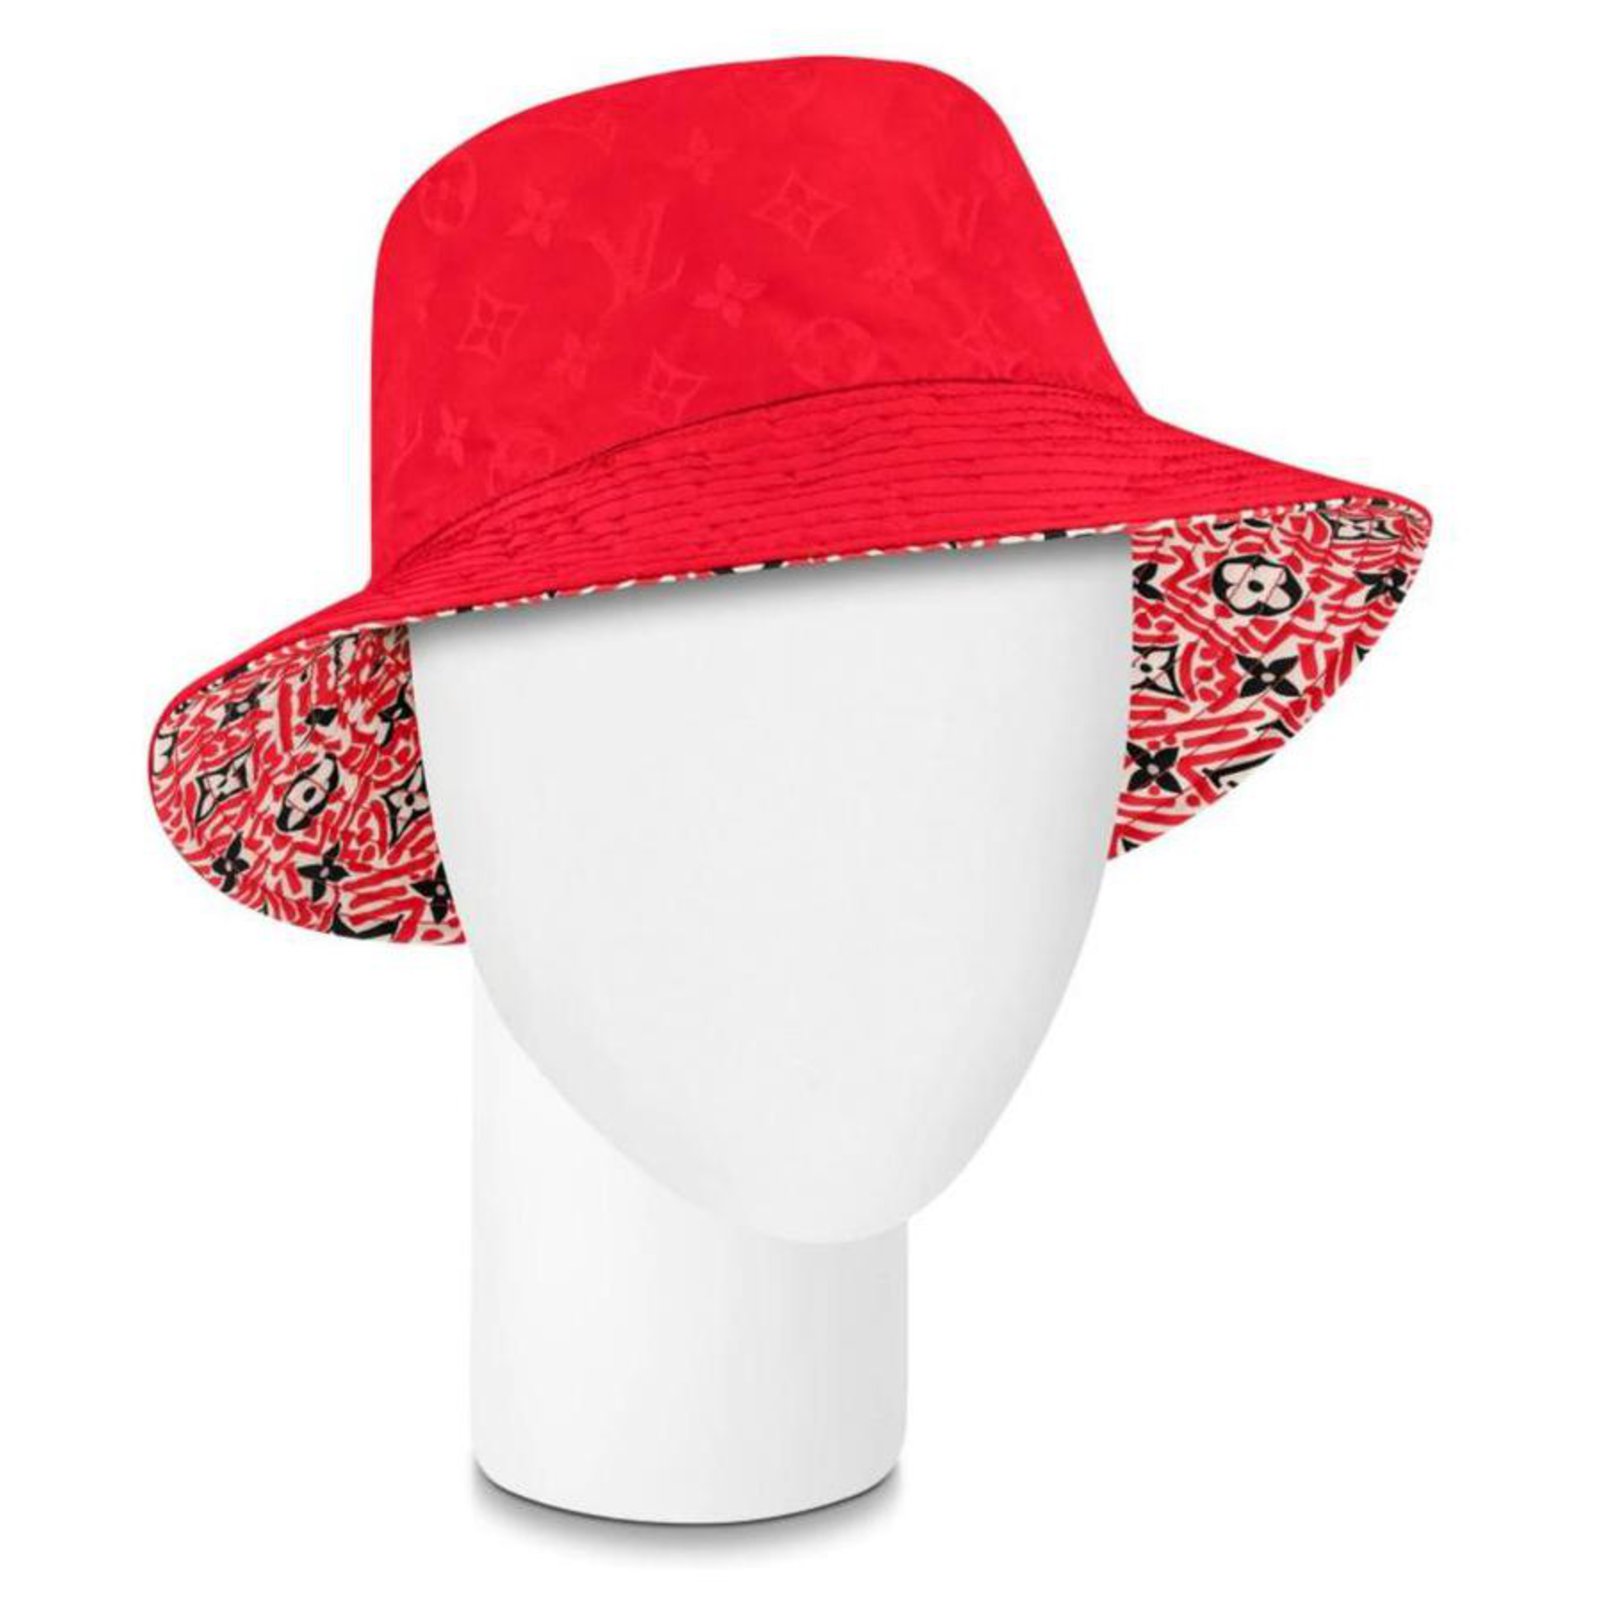 LV hattu-hattu – LaeppaStore